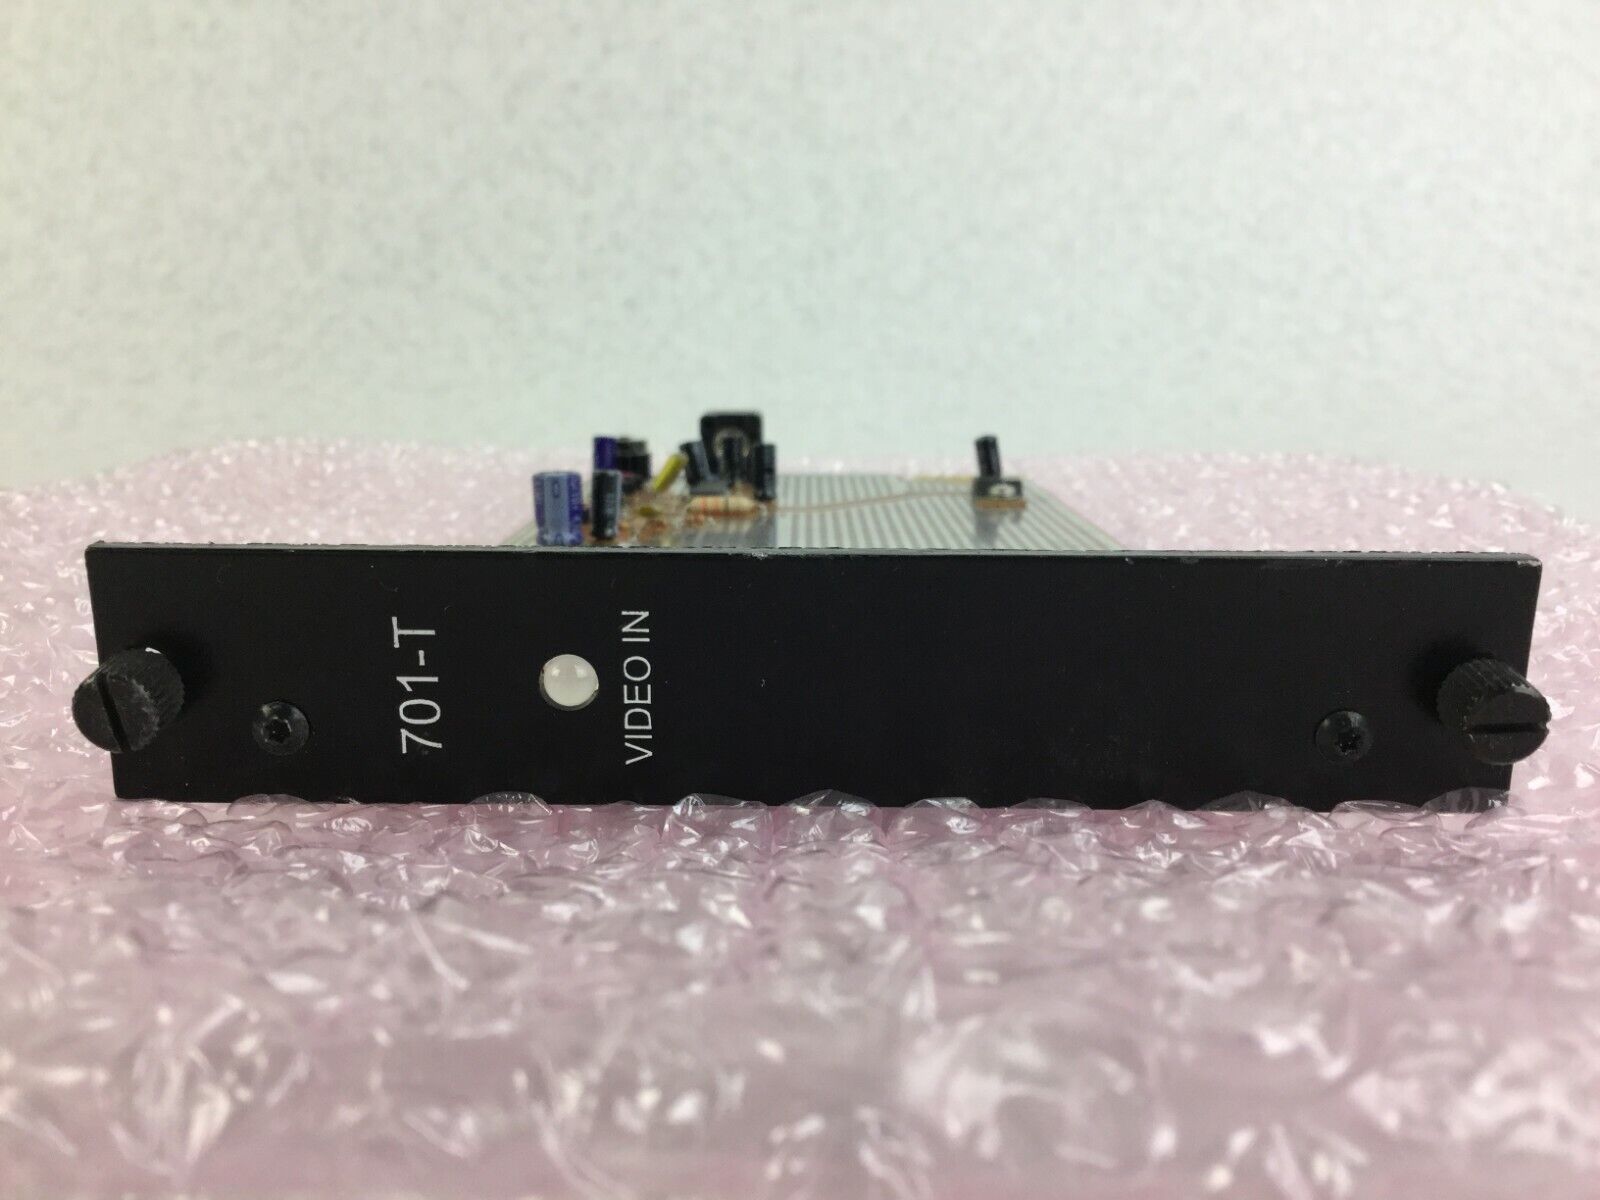 Fiber Options S701VT-RST Control Board Transmitter 701-T